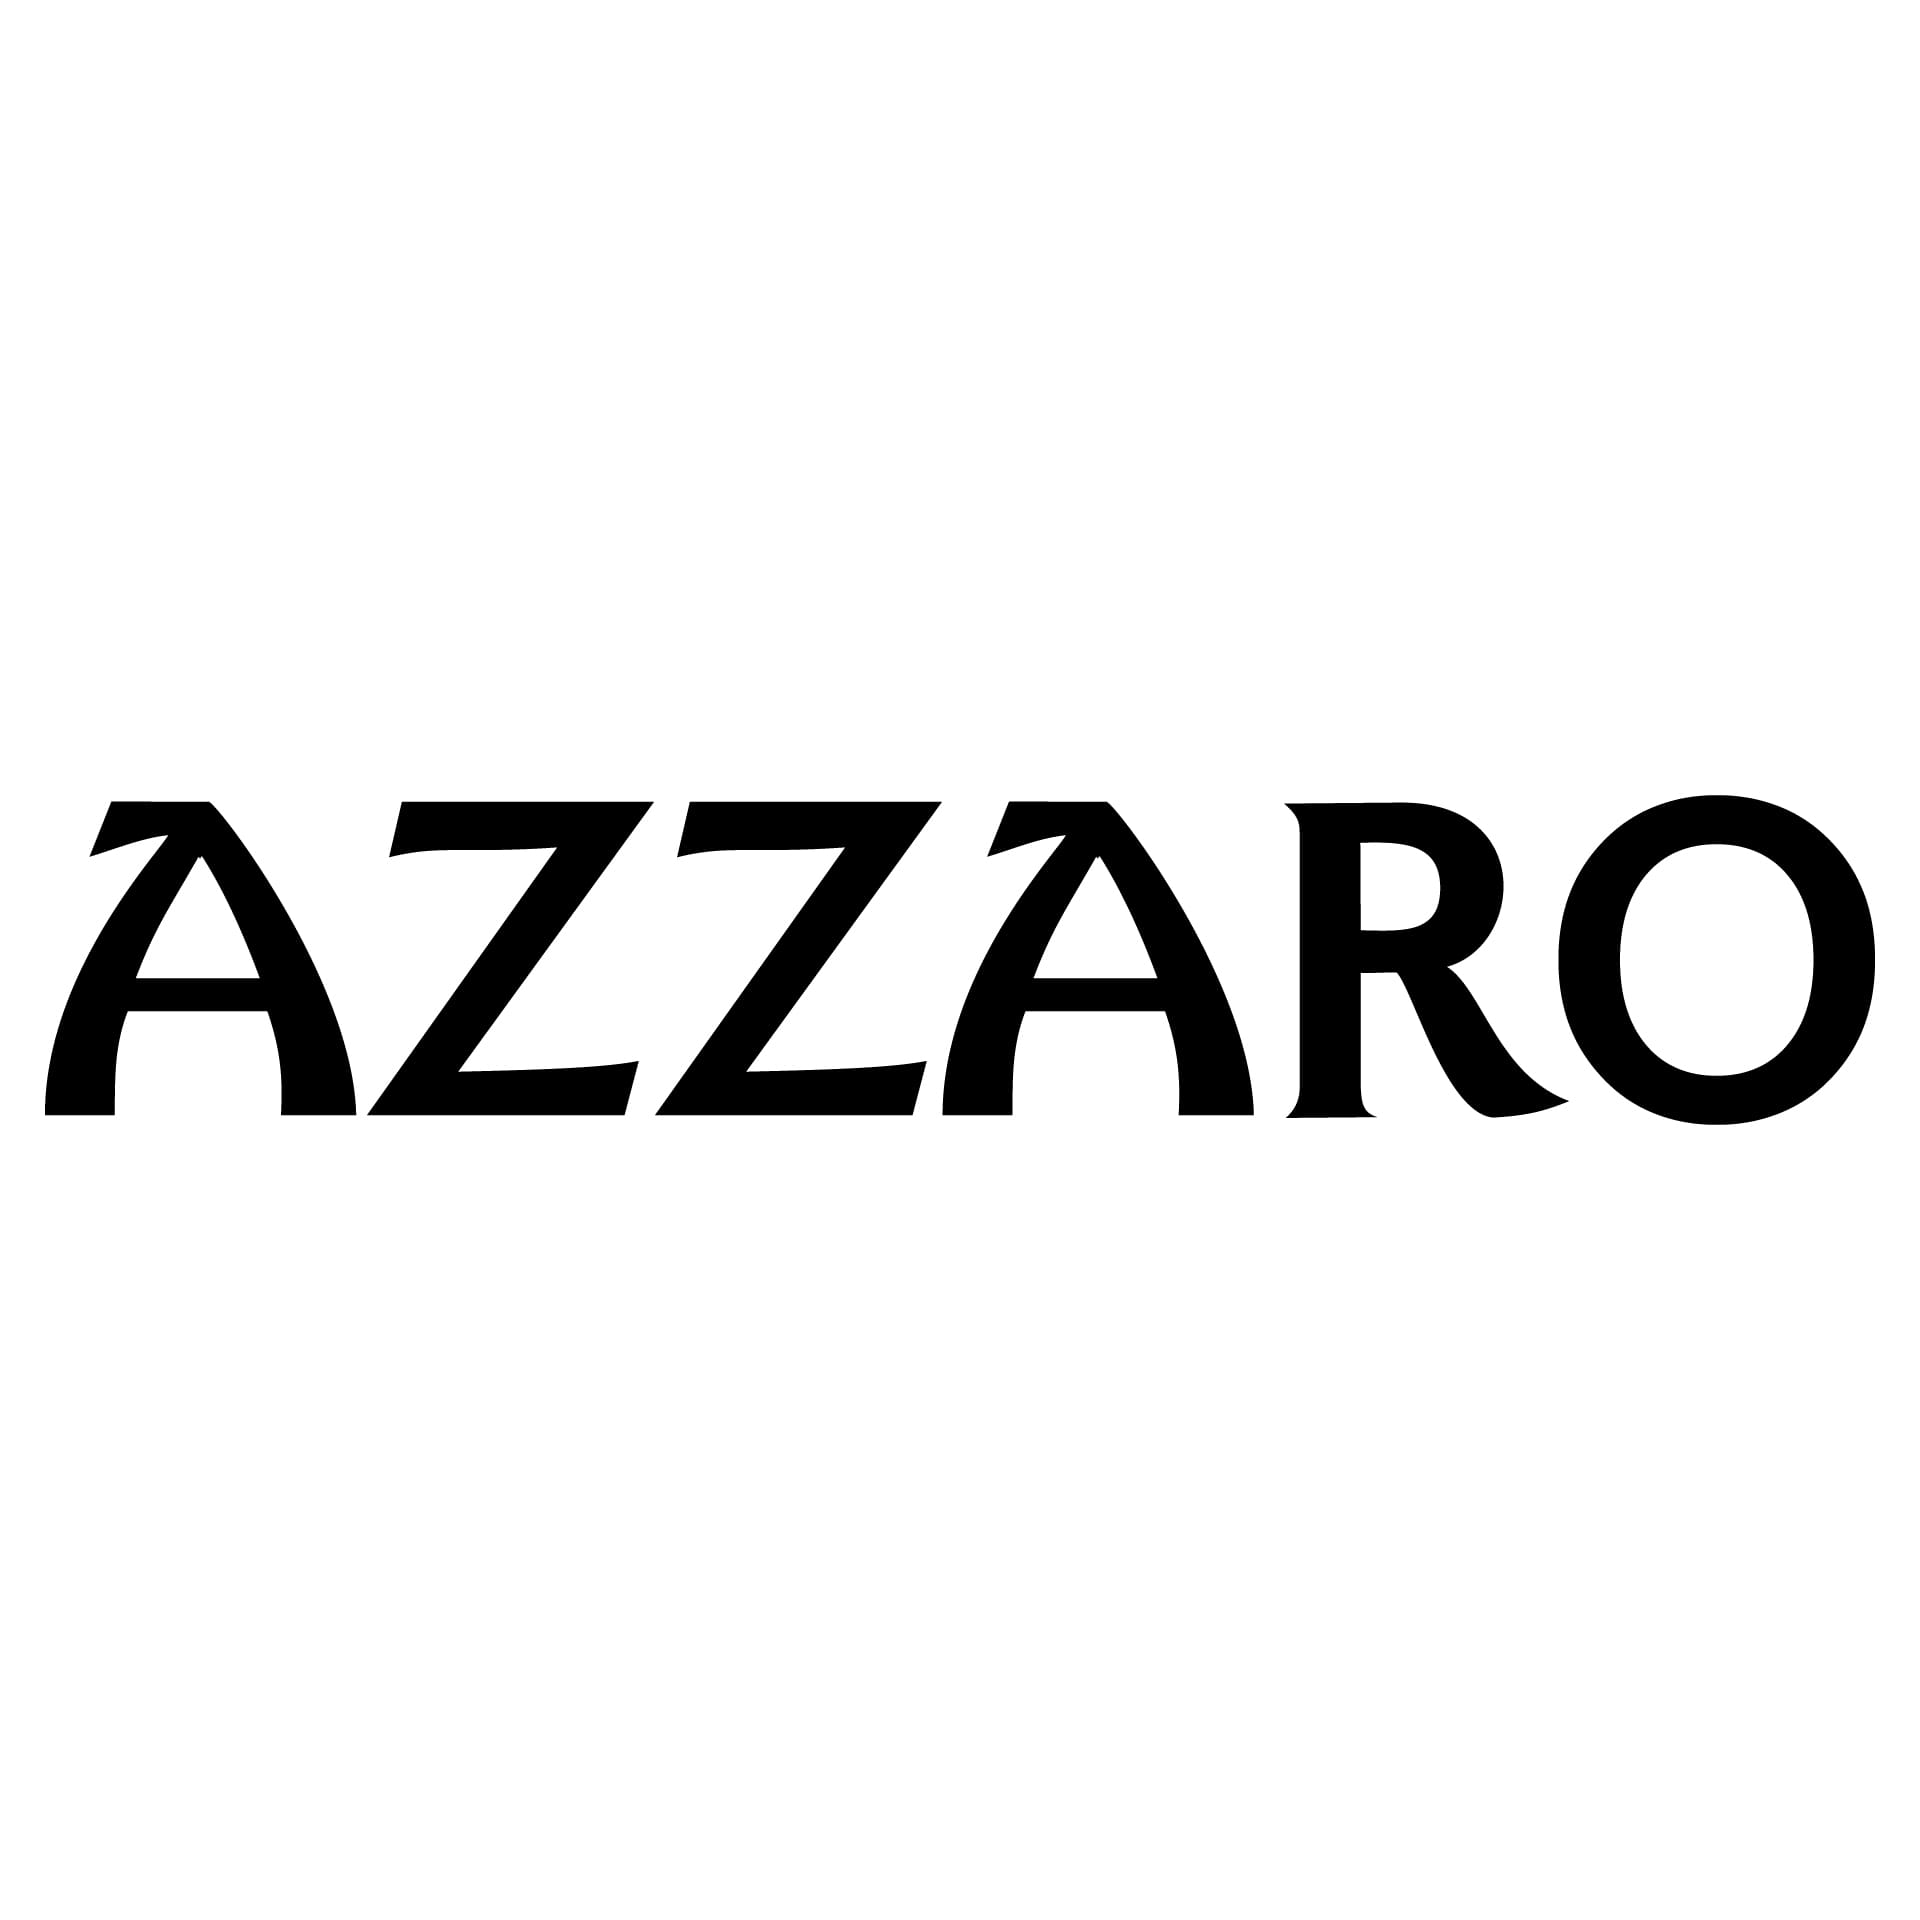 Azzaro